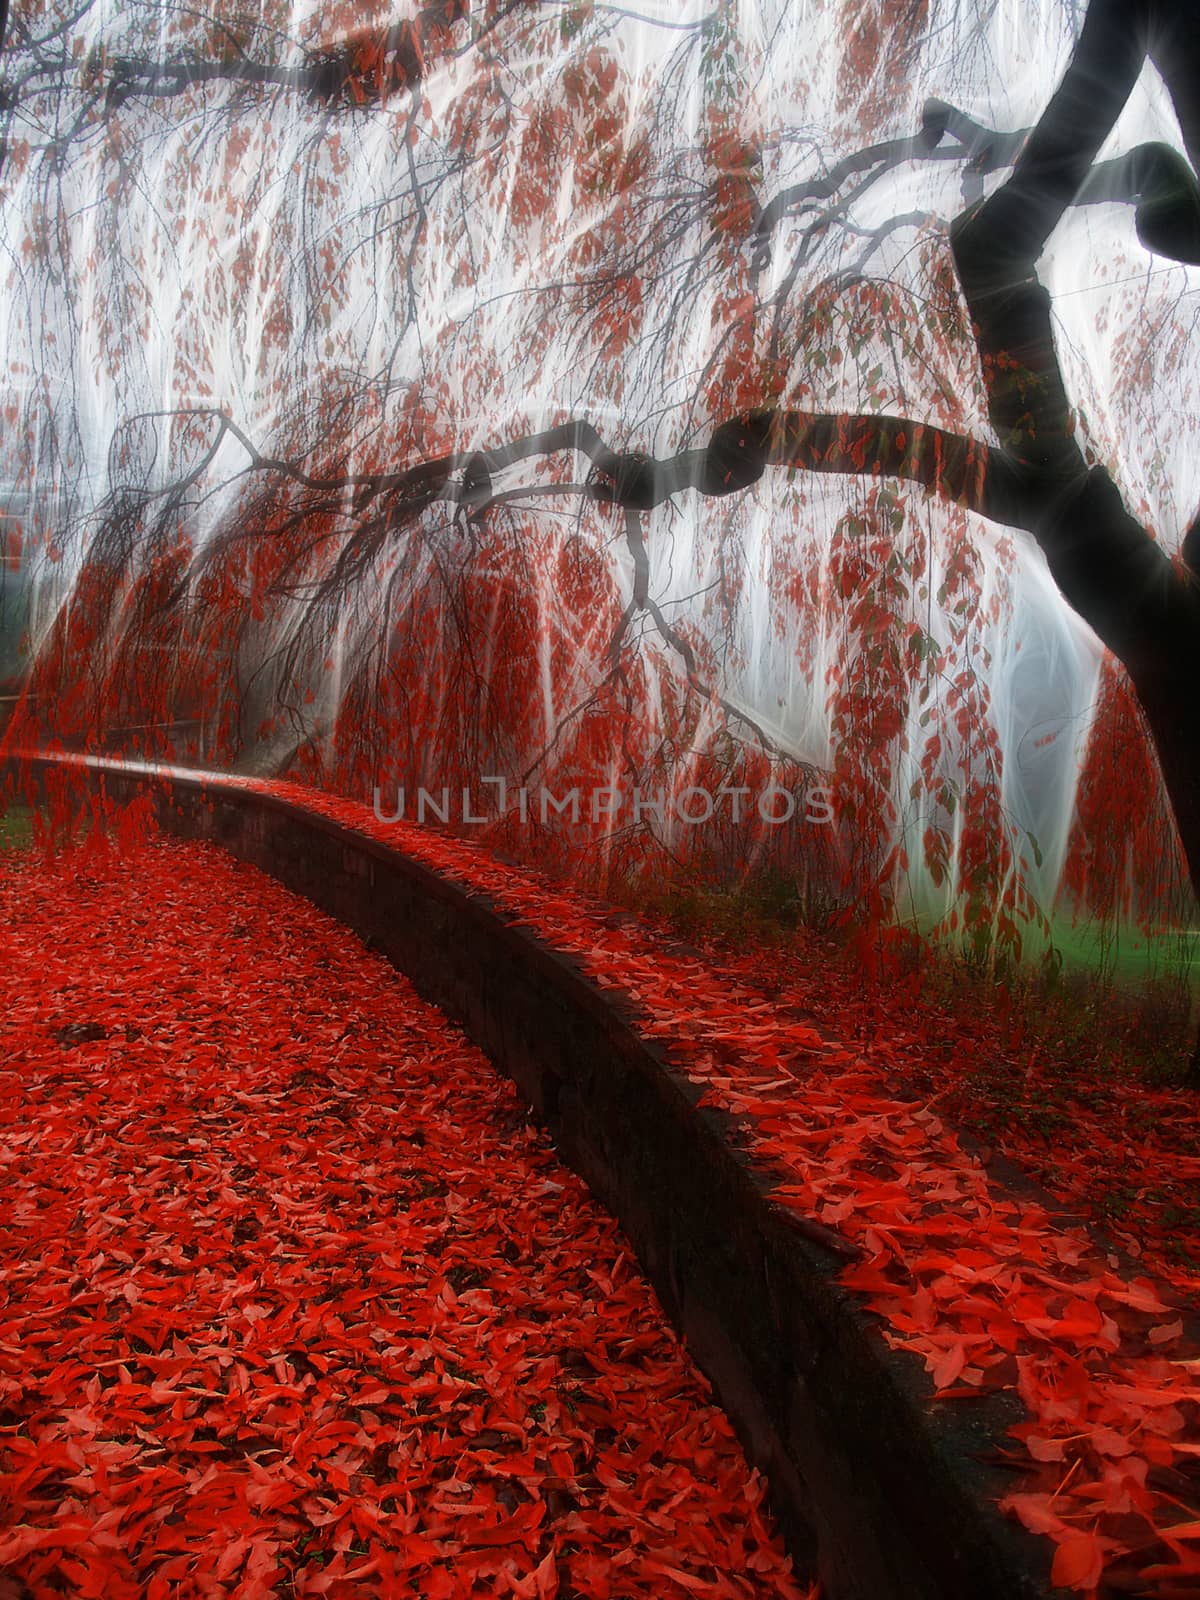 Impressionist autumn scene. Red leafs